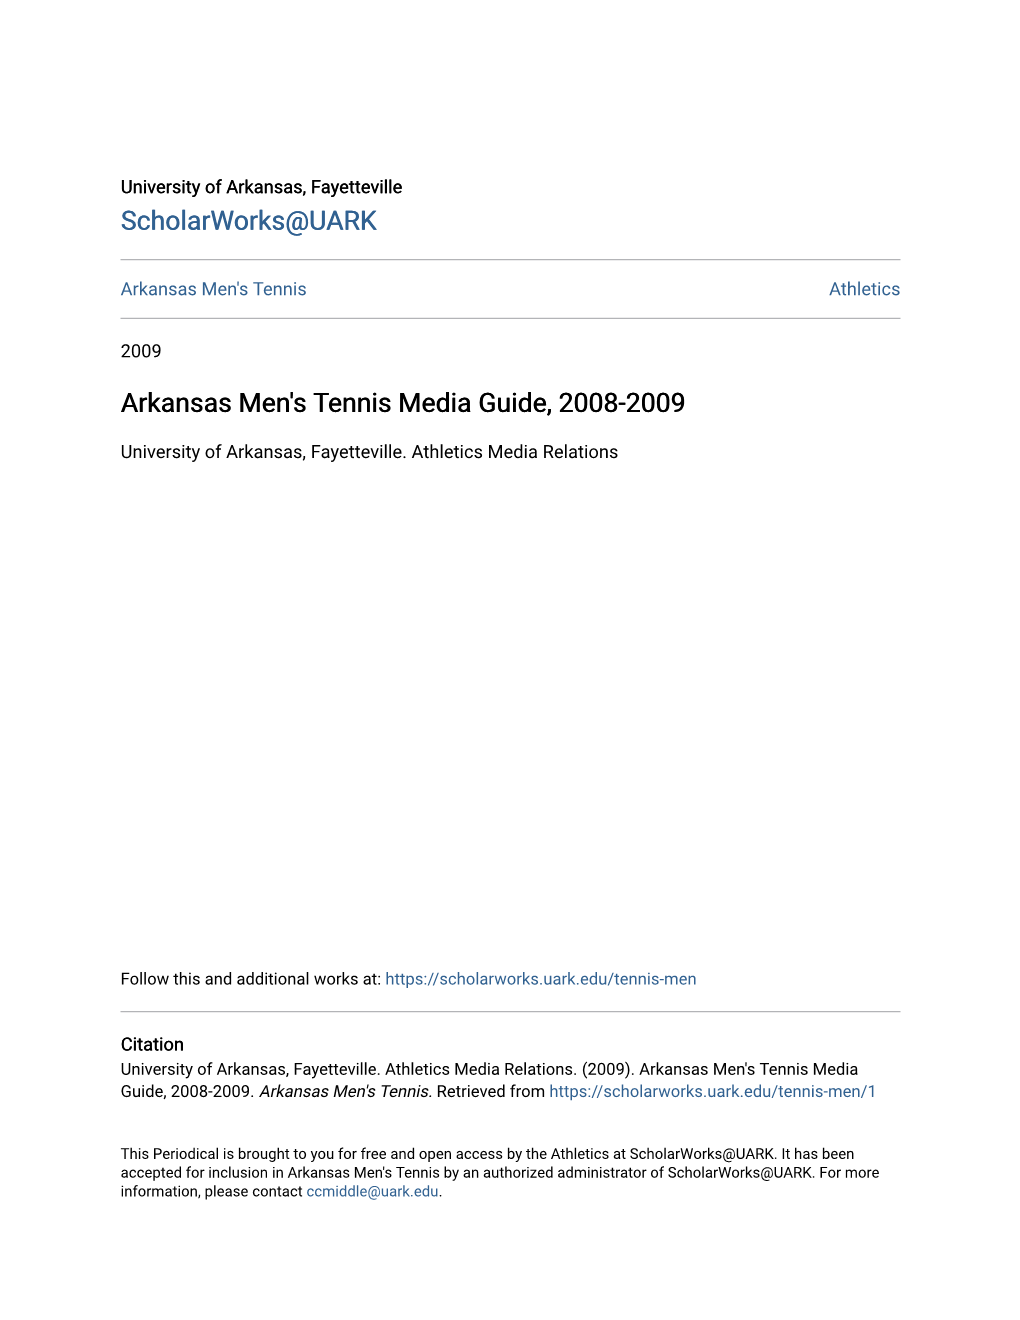 Arkansas Men's Tennis Media Guide, 2008-2009